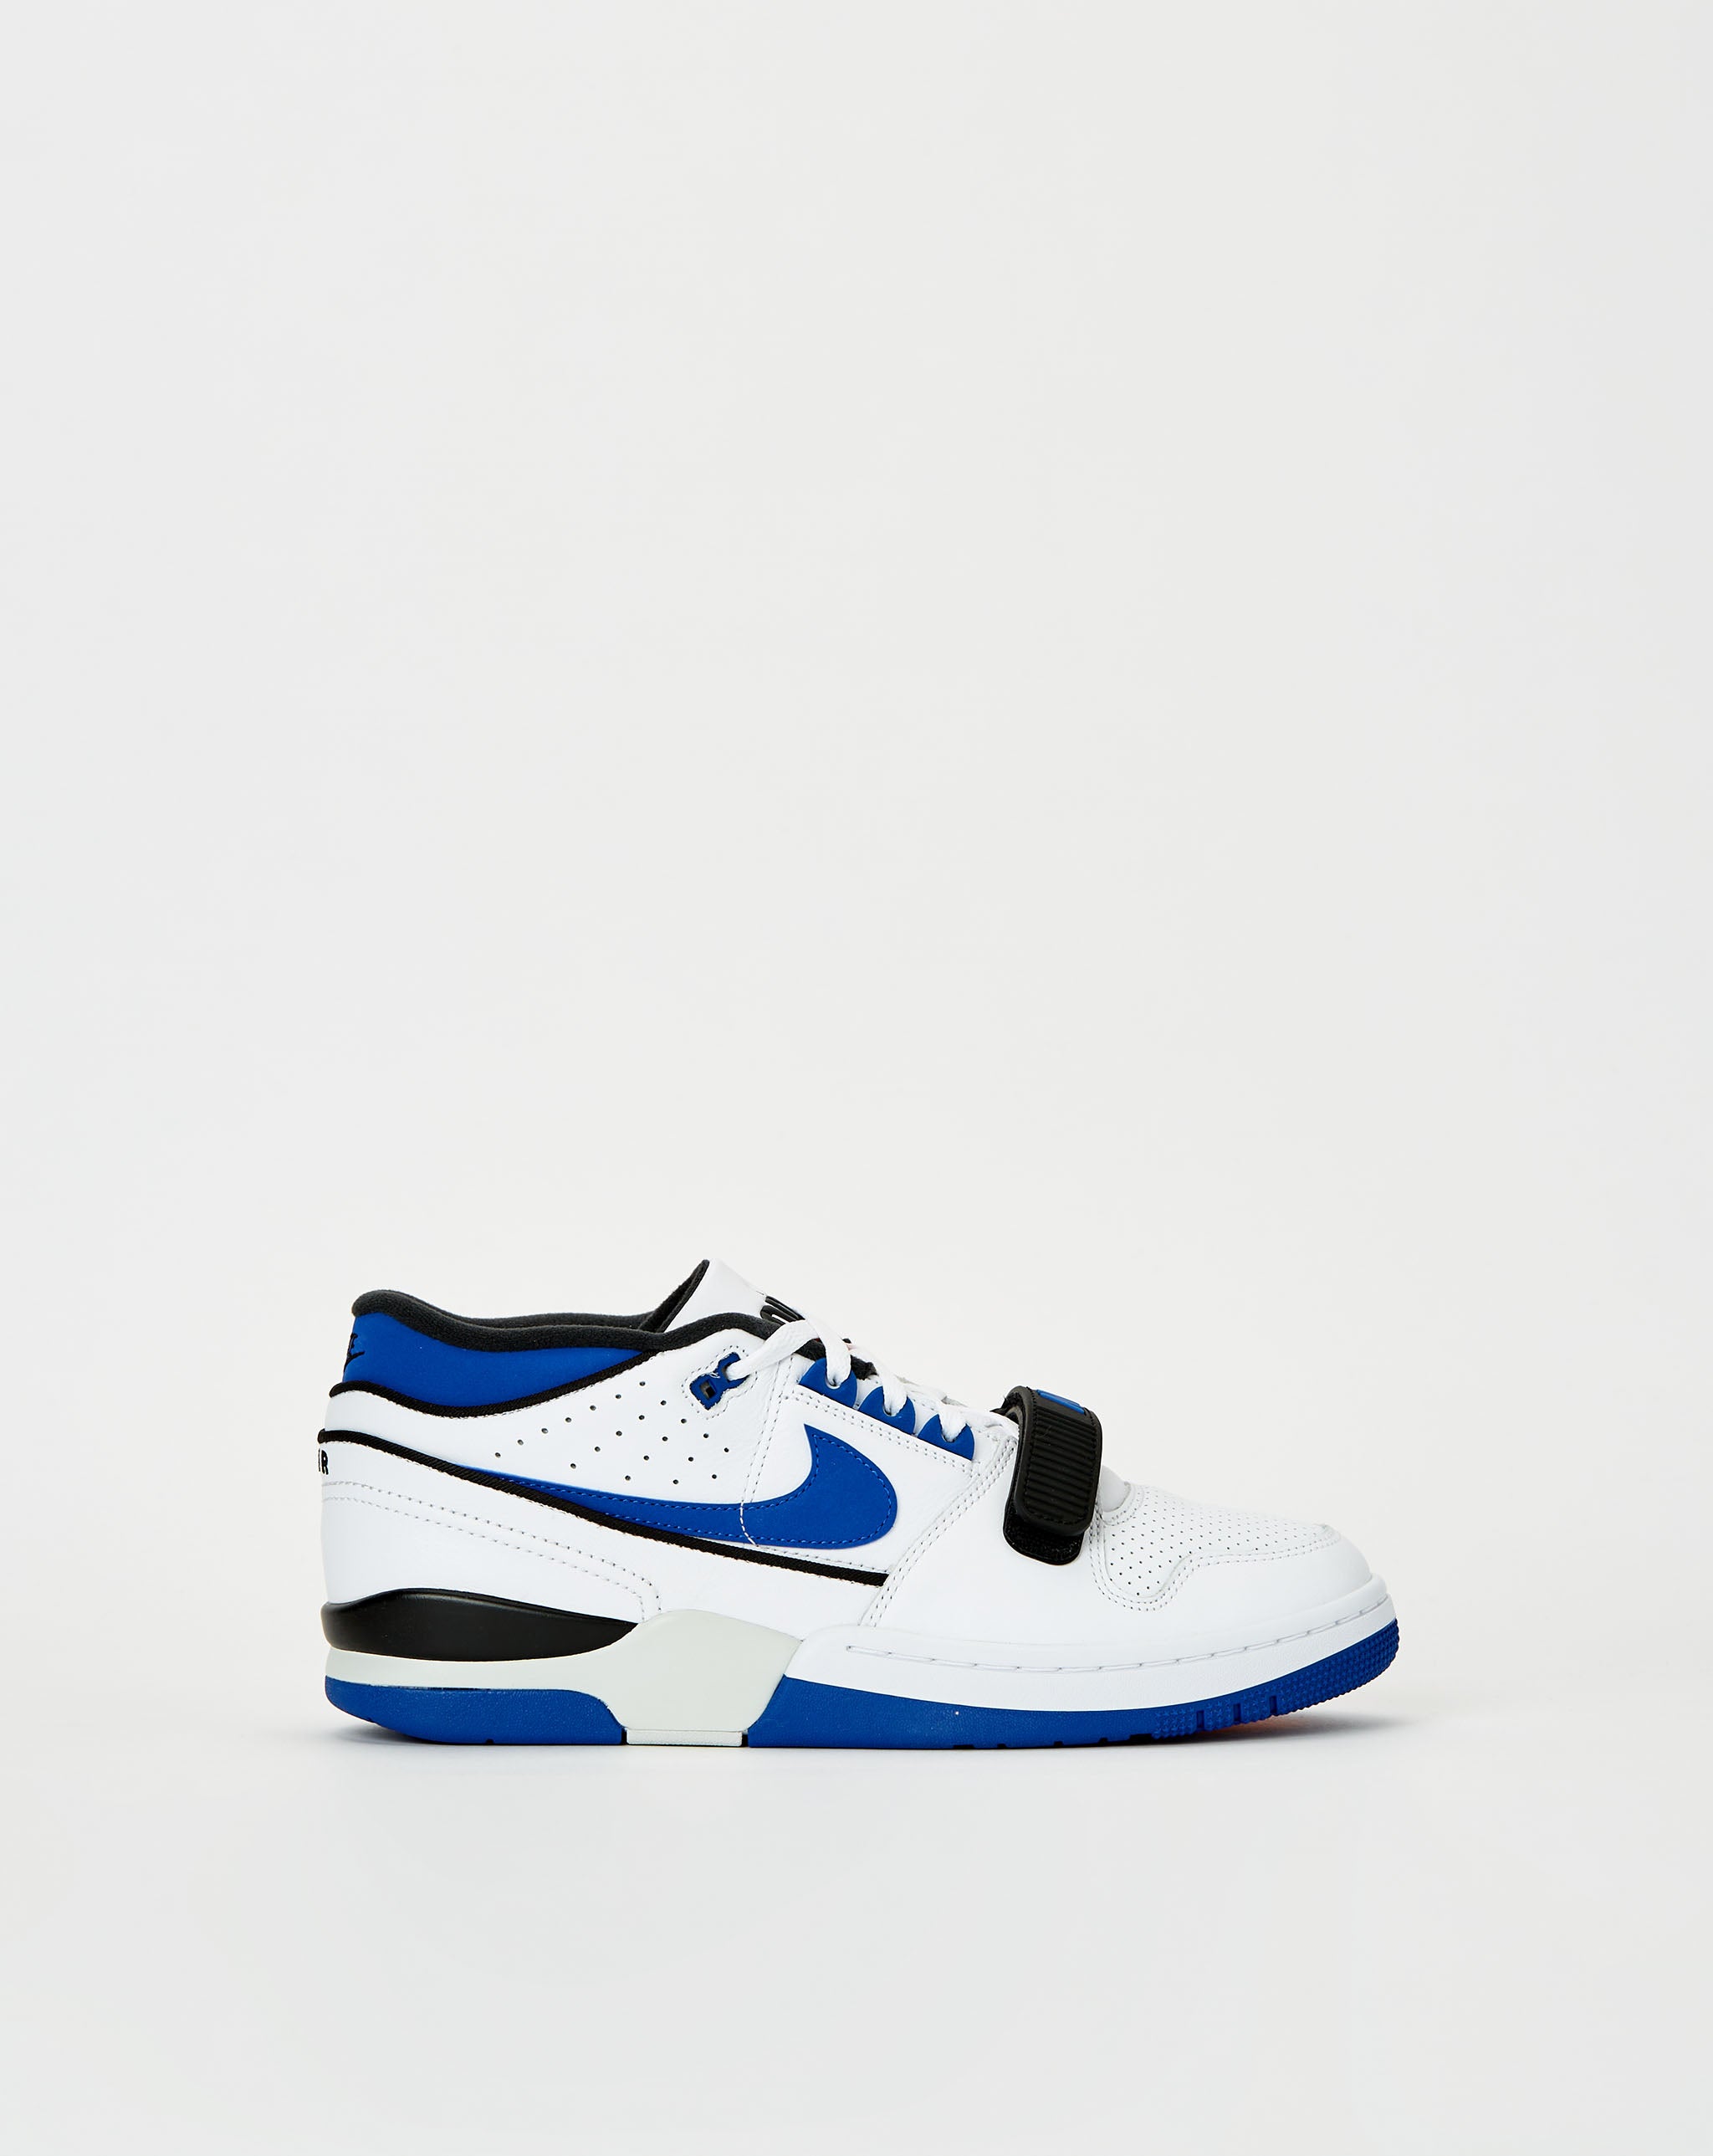 Nike Nike Air Zoom Speed Rival 6 Marathon Running Shoes Sneakers 880553-606  - Cheap Erlebniswelt-fliegenfischen Jordan outlet